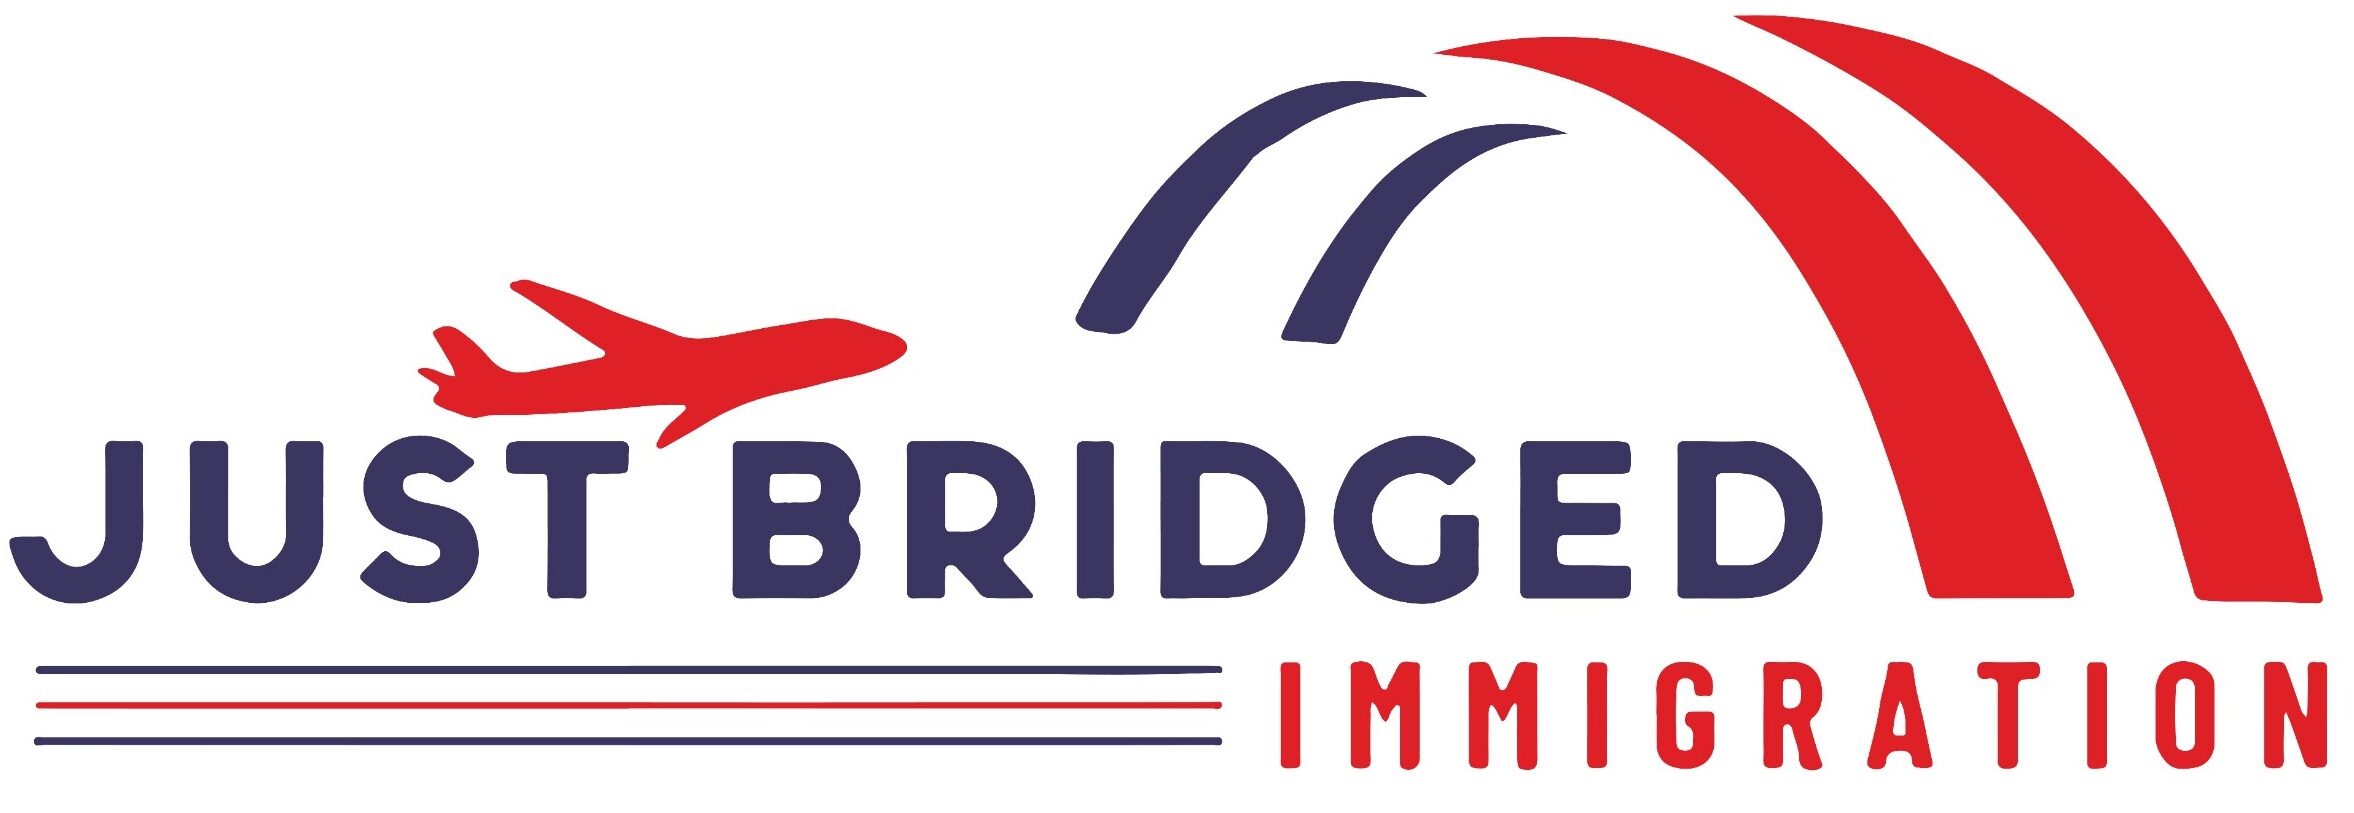 Just Bridged Immigration